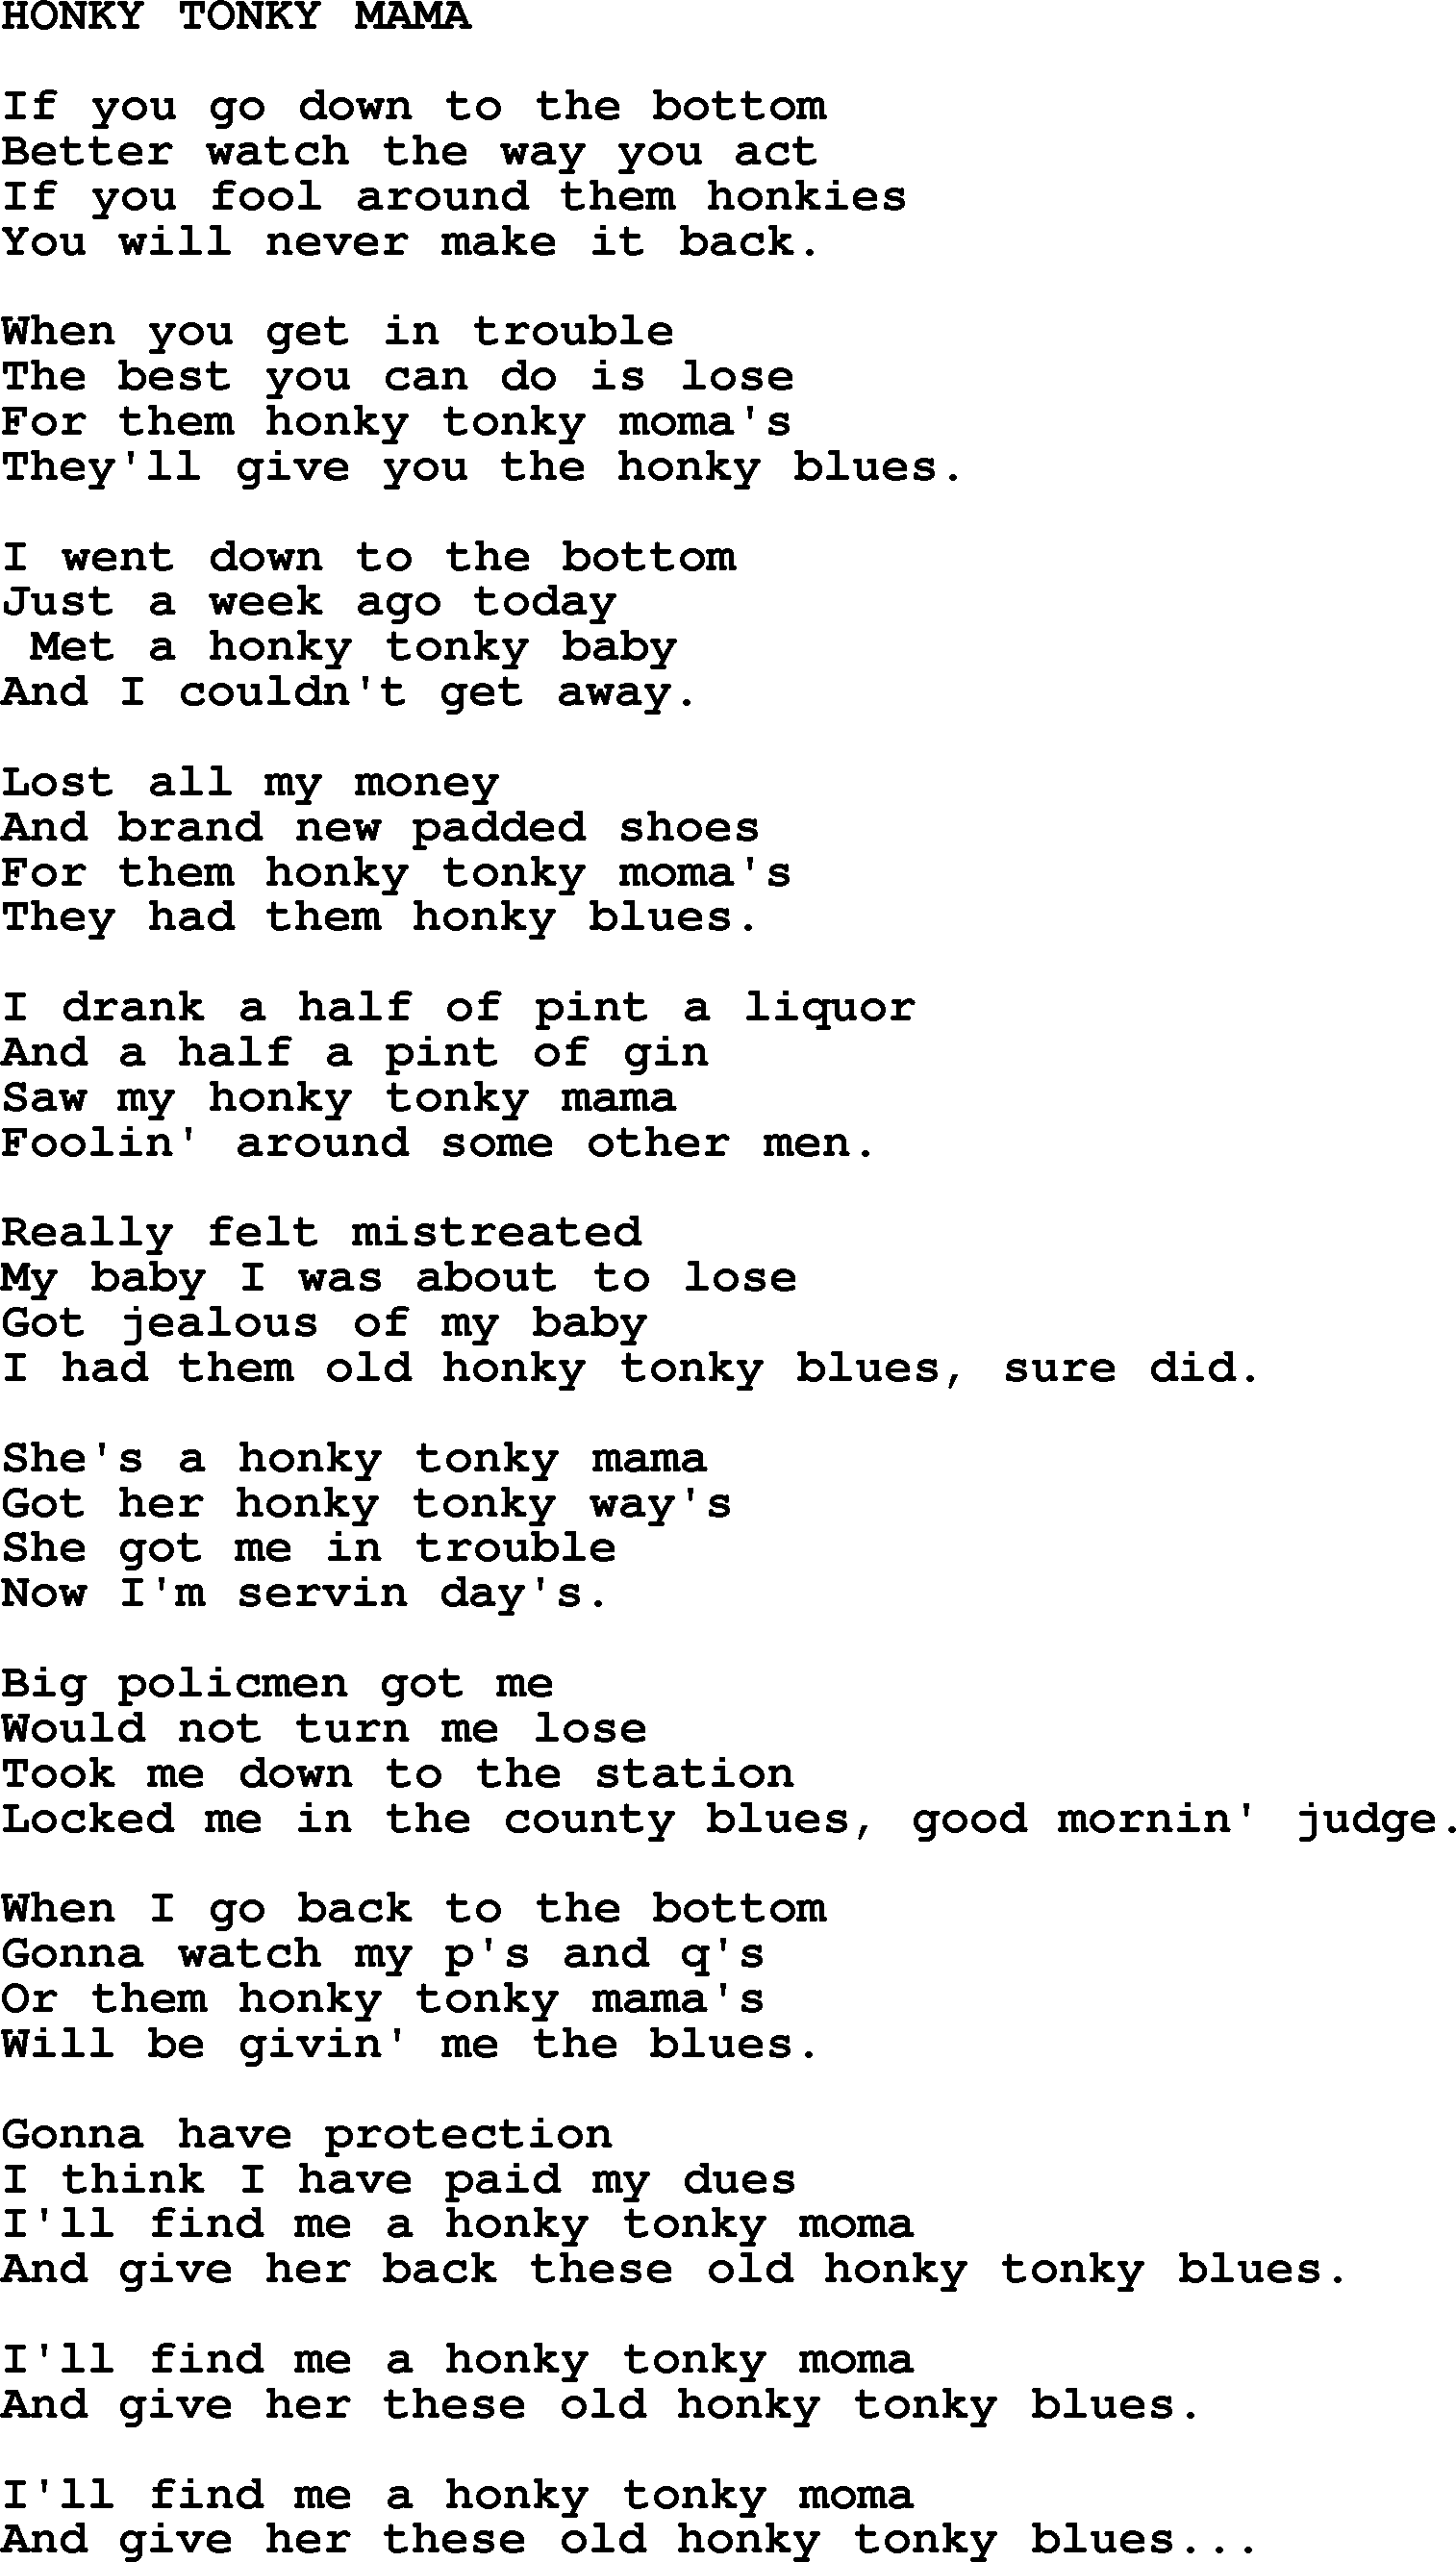 Merle Haggard song: Honky Tonky Mama, lyrics.